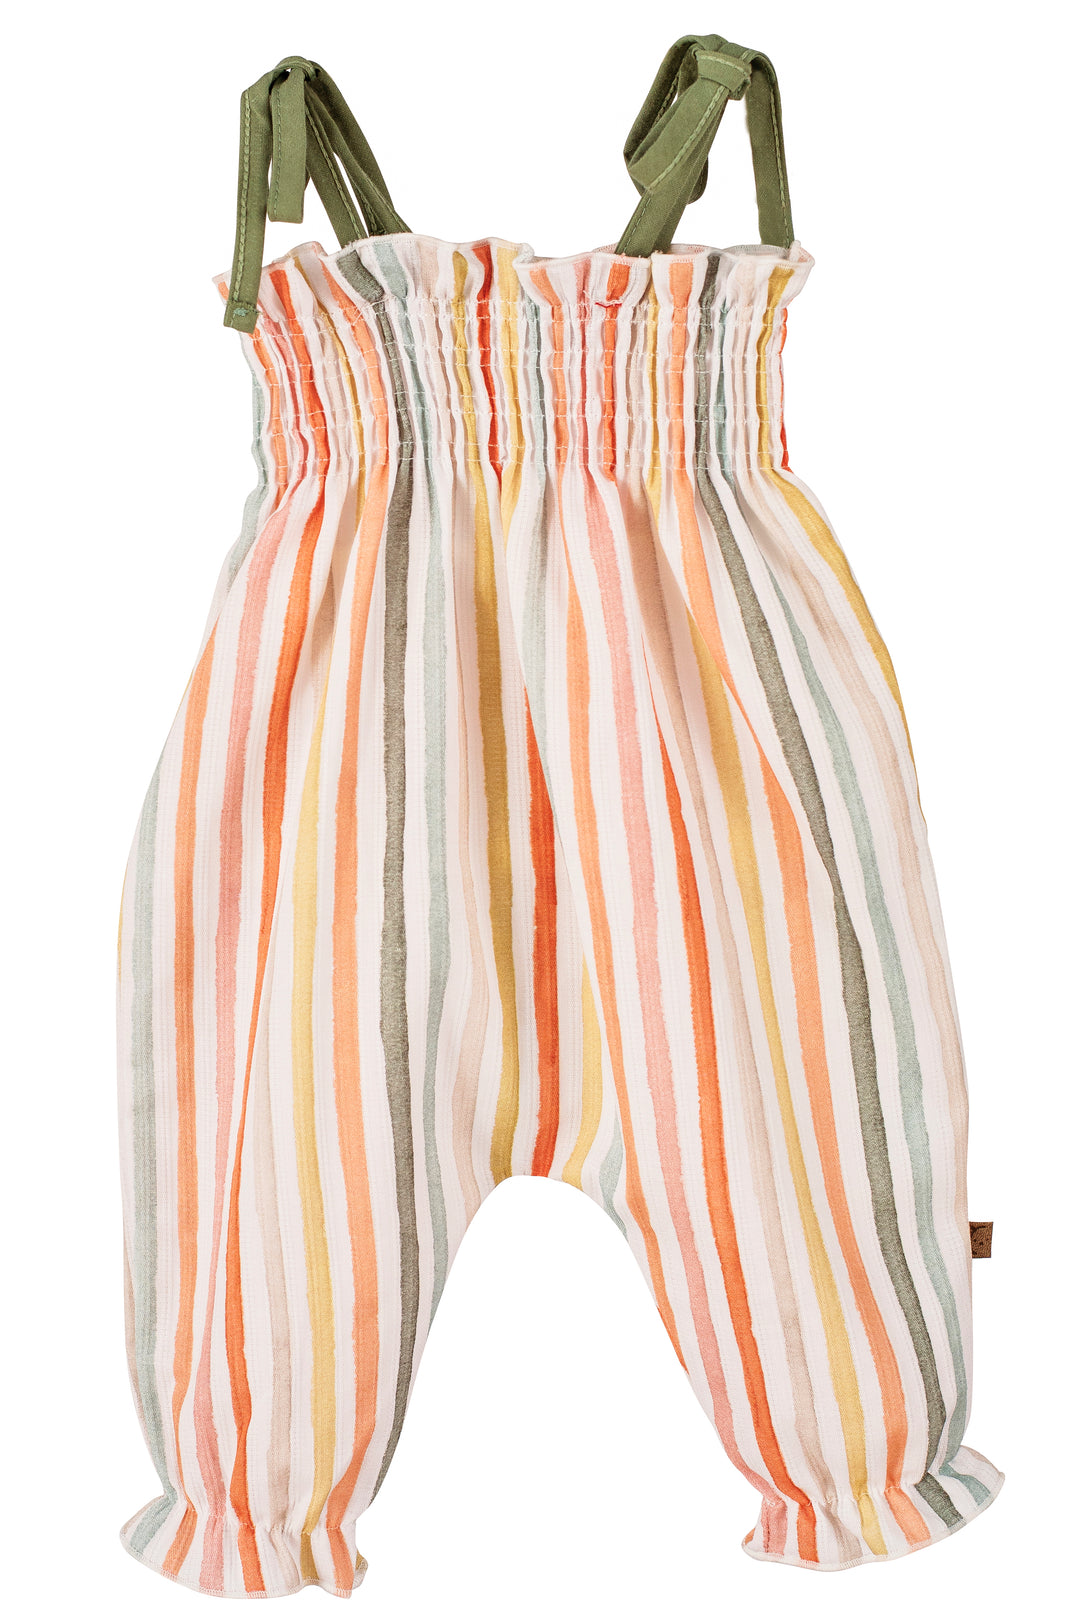 Calamaro PREORDER "Scarlett" Orange Striped Jumpsuit | Millie and John